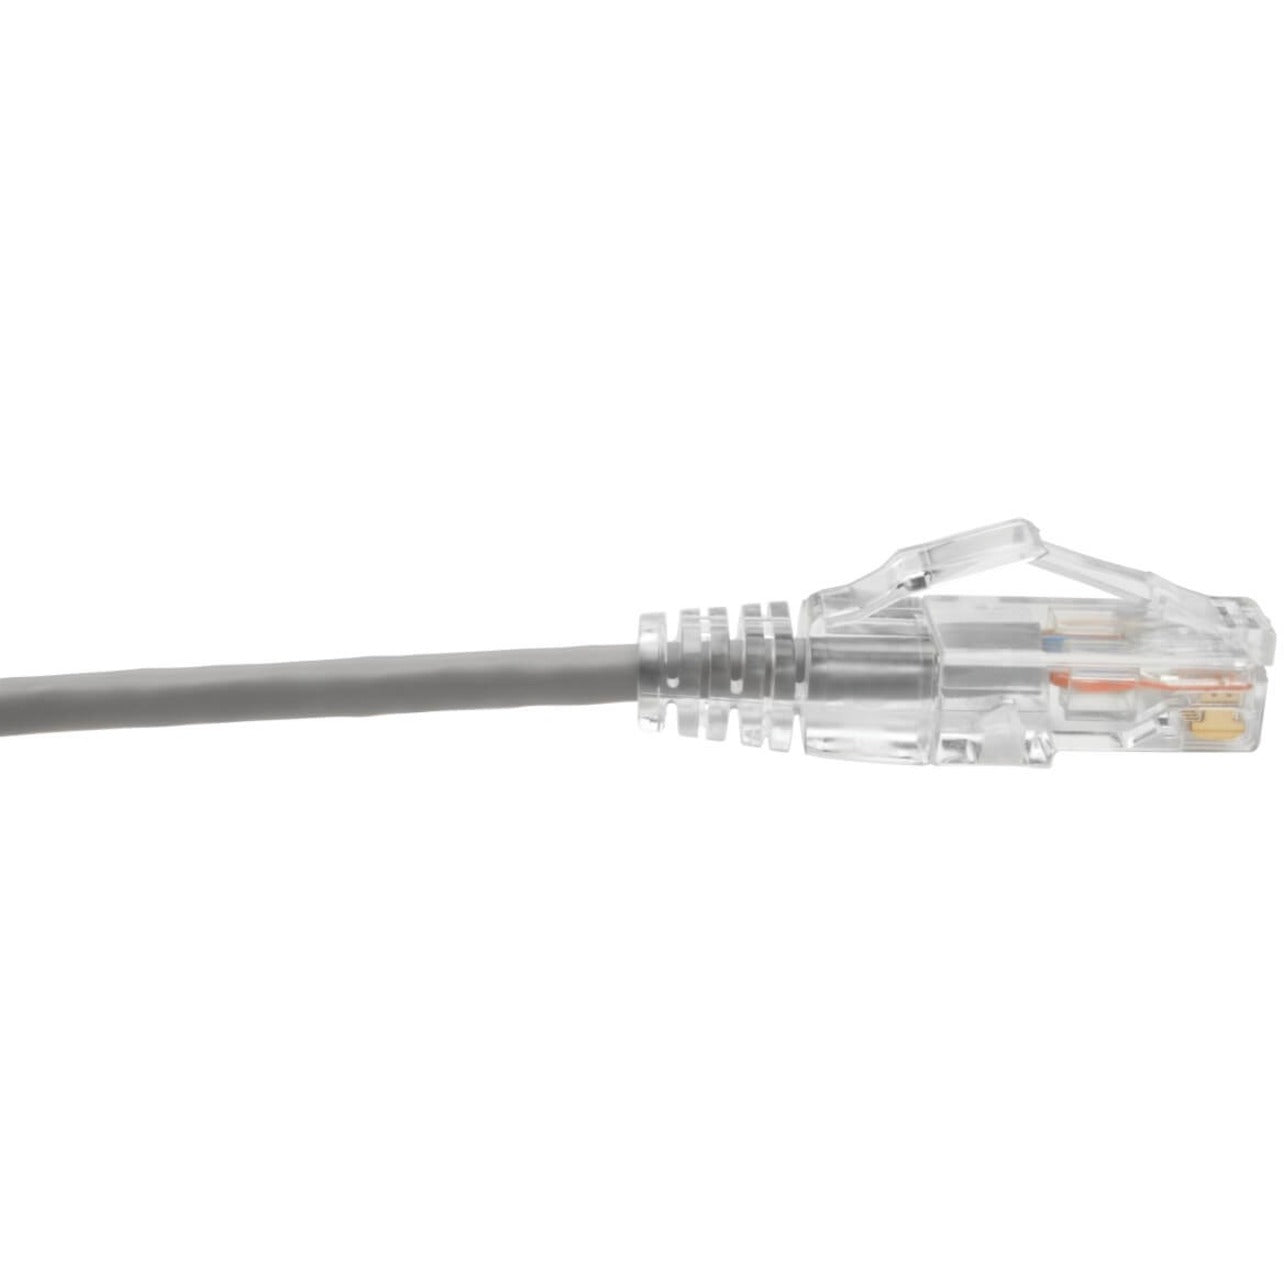 Tripp Lite N201-S07-GY Cat6 UTP Patch Cable (RJ45) - M/M, Gigabit, Snagless, Molded, Slim, Gray, 7 ft.